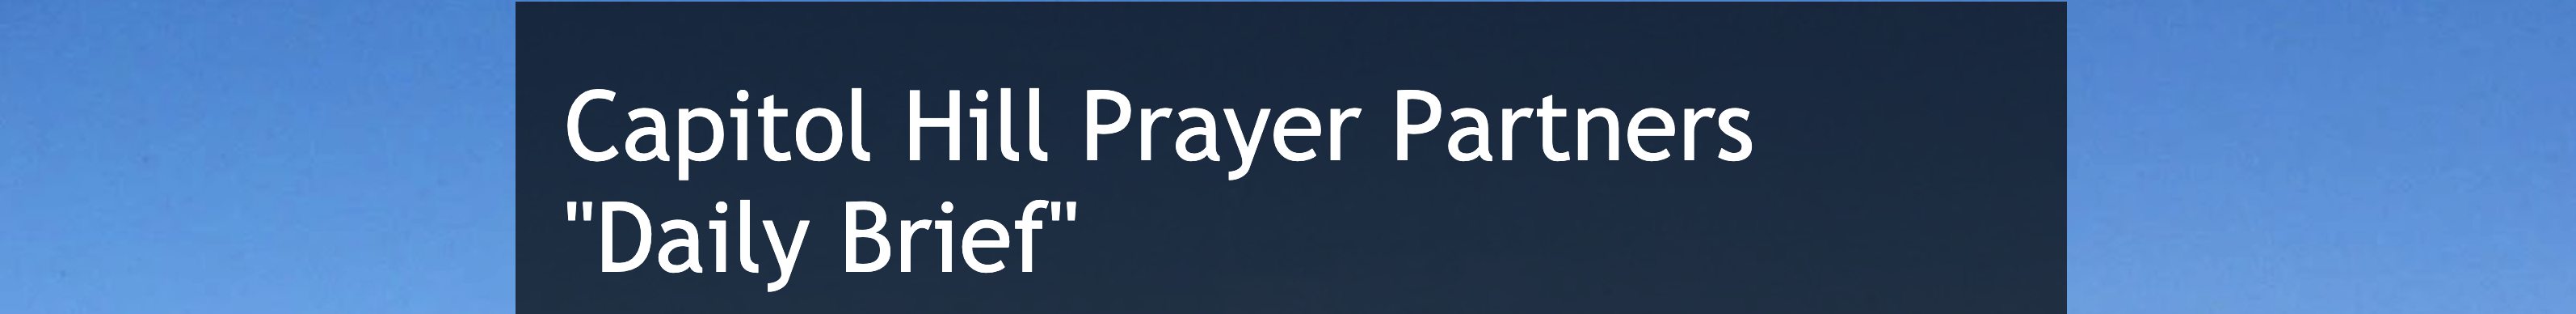 Capital Hill Prayer Partner Daily Brief